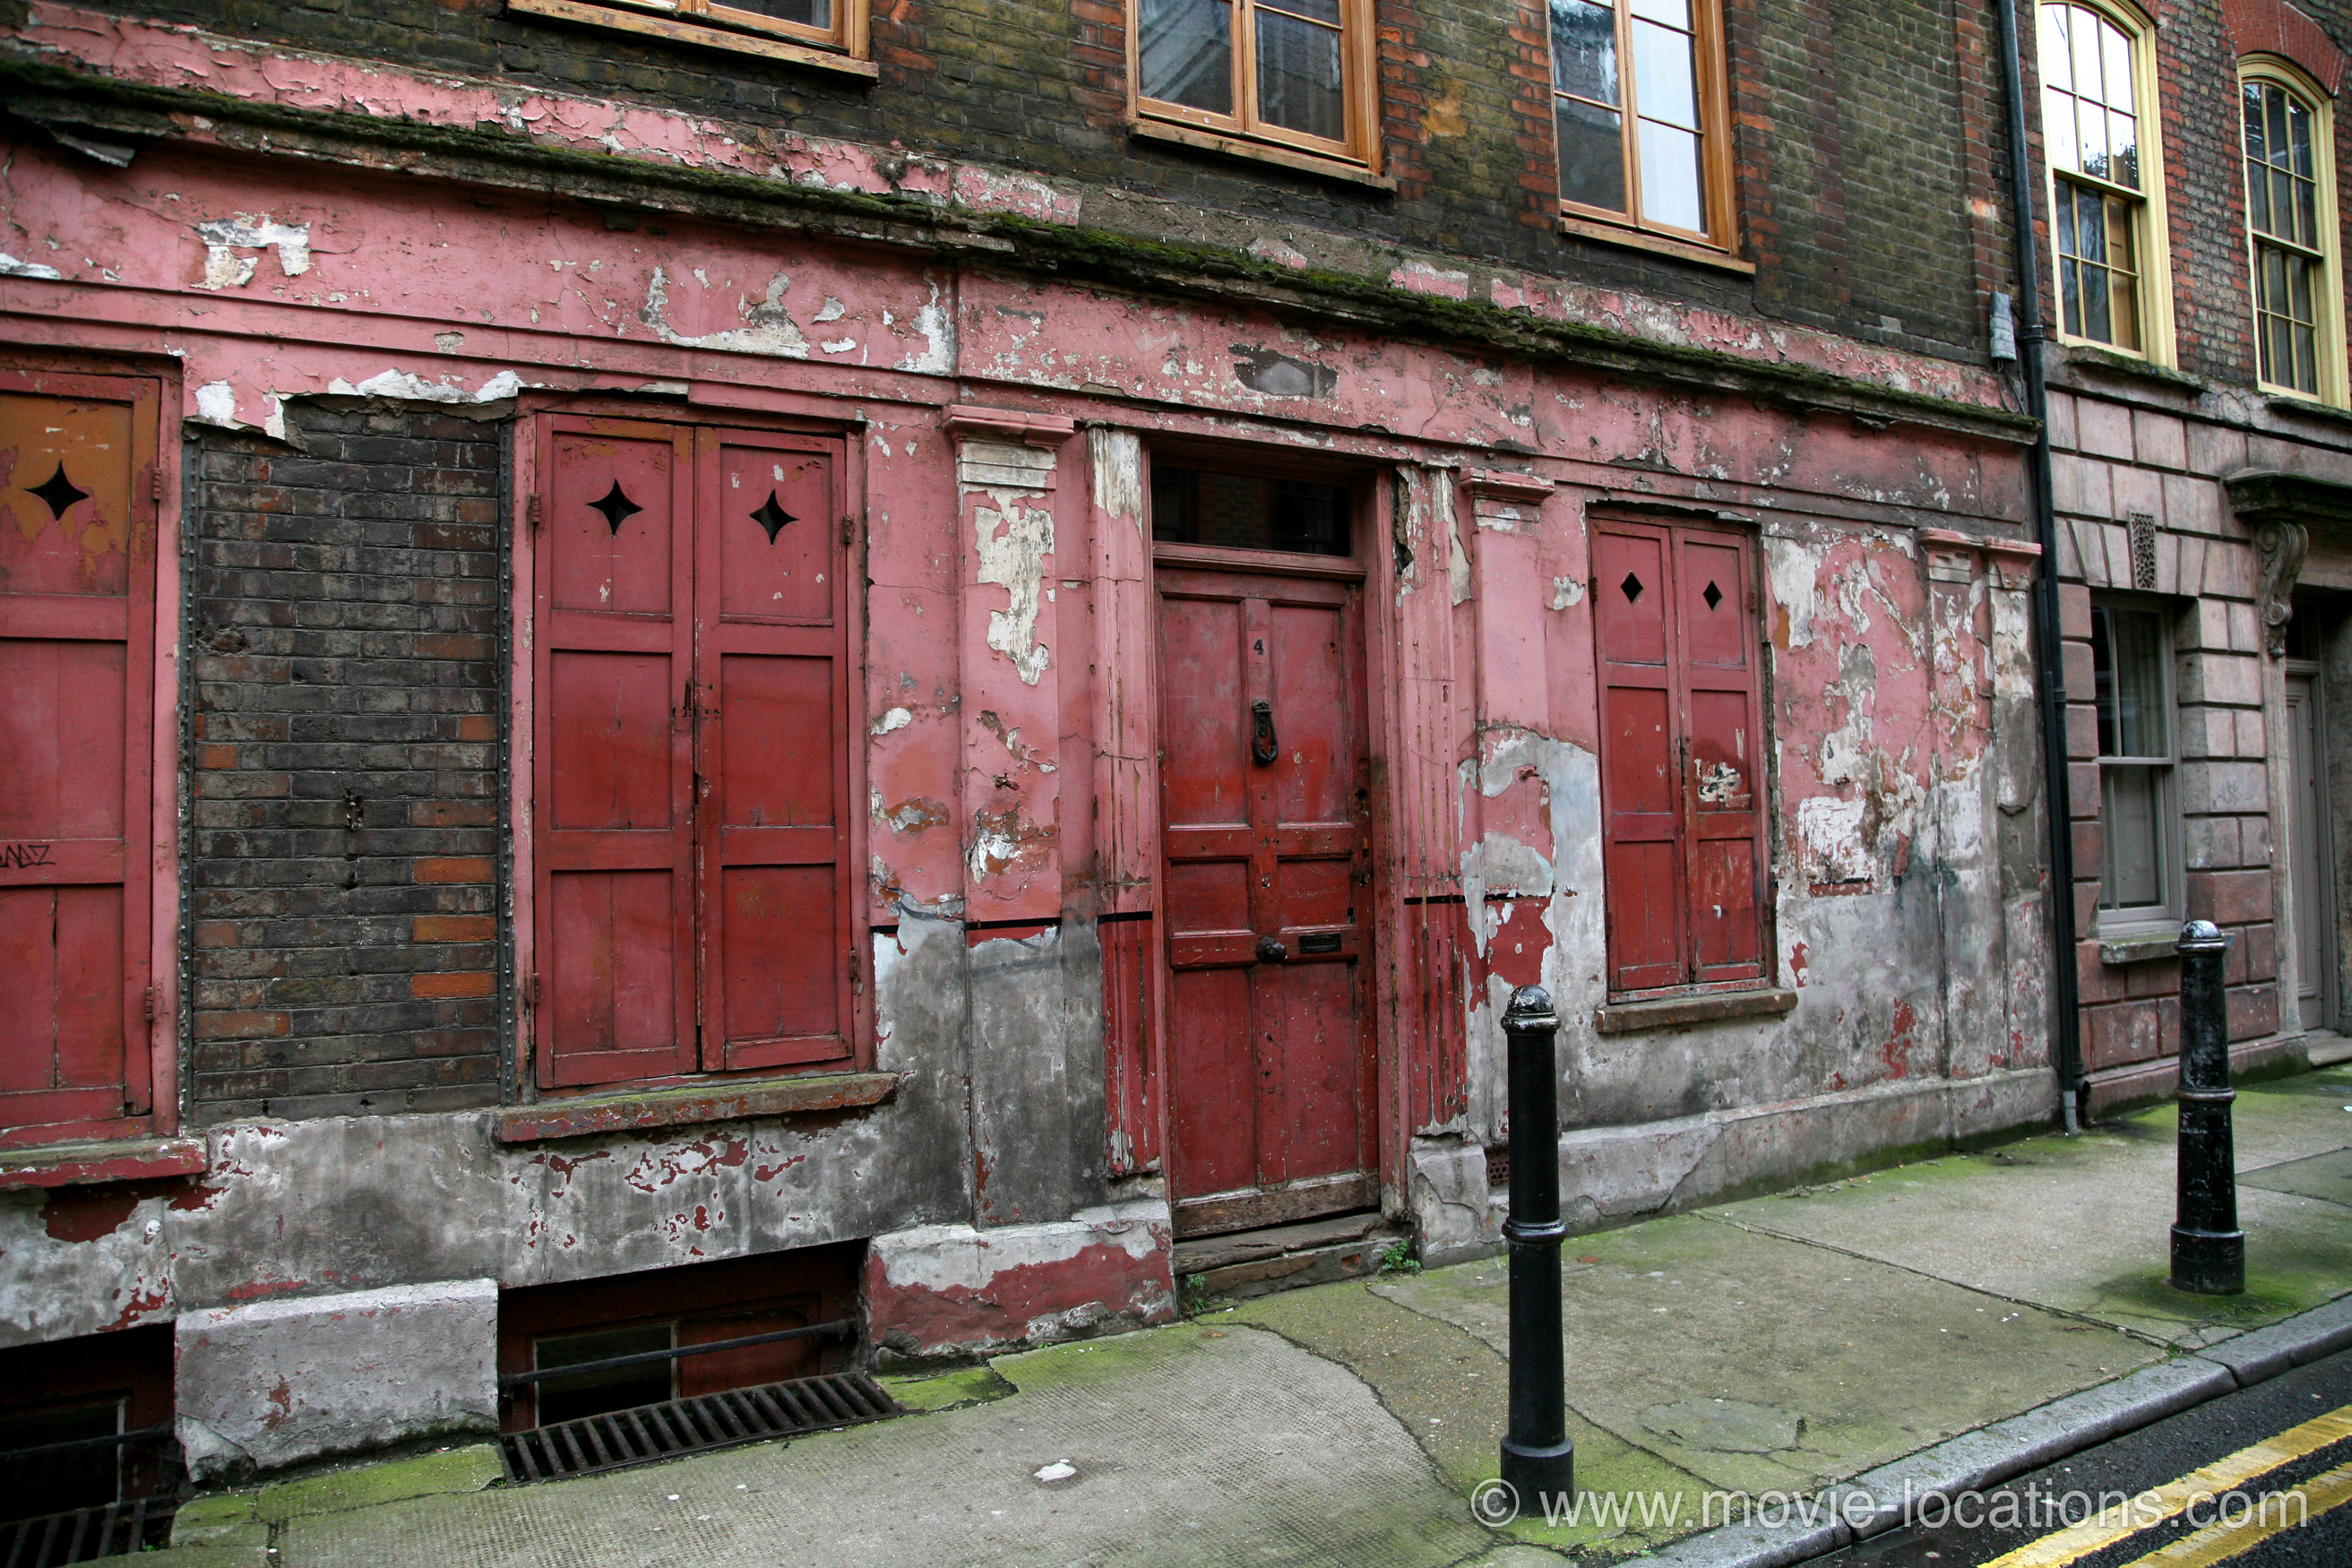 The Danish Girl filming location: Princelet Street, Spitalfields, London E1